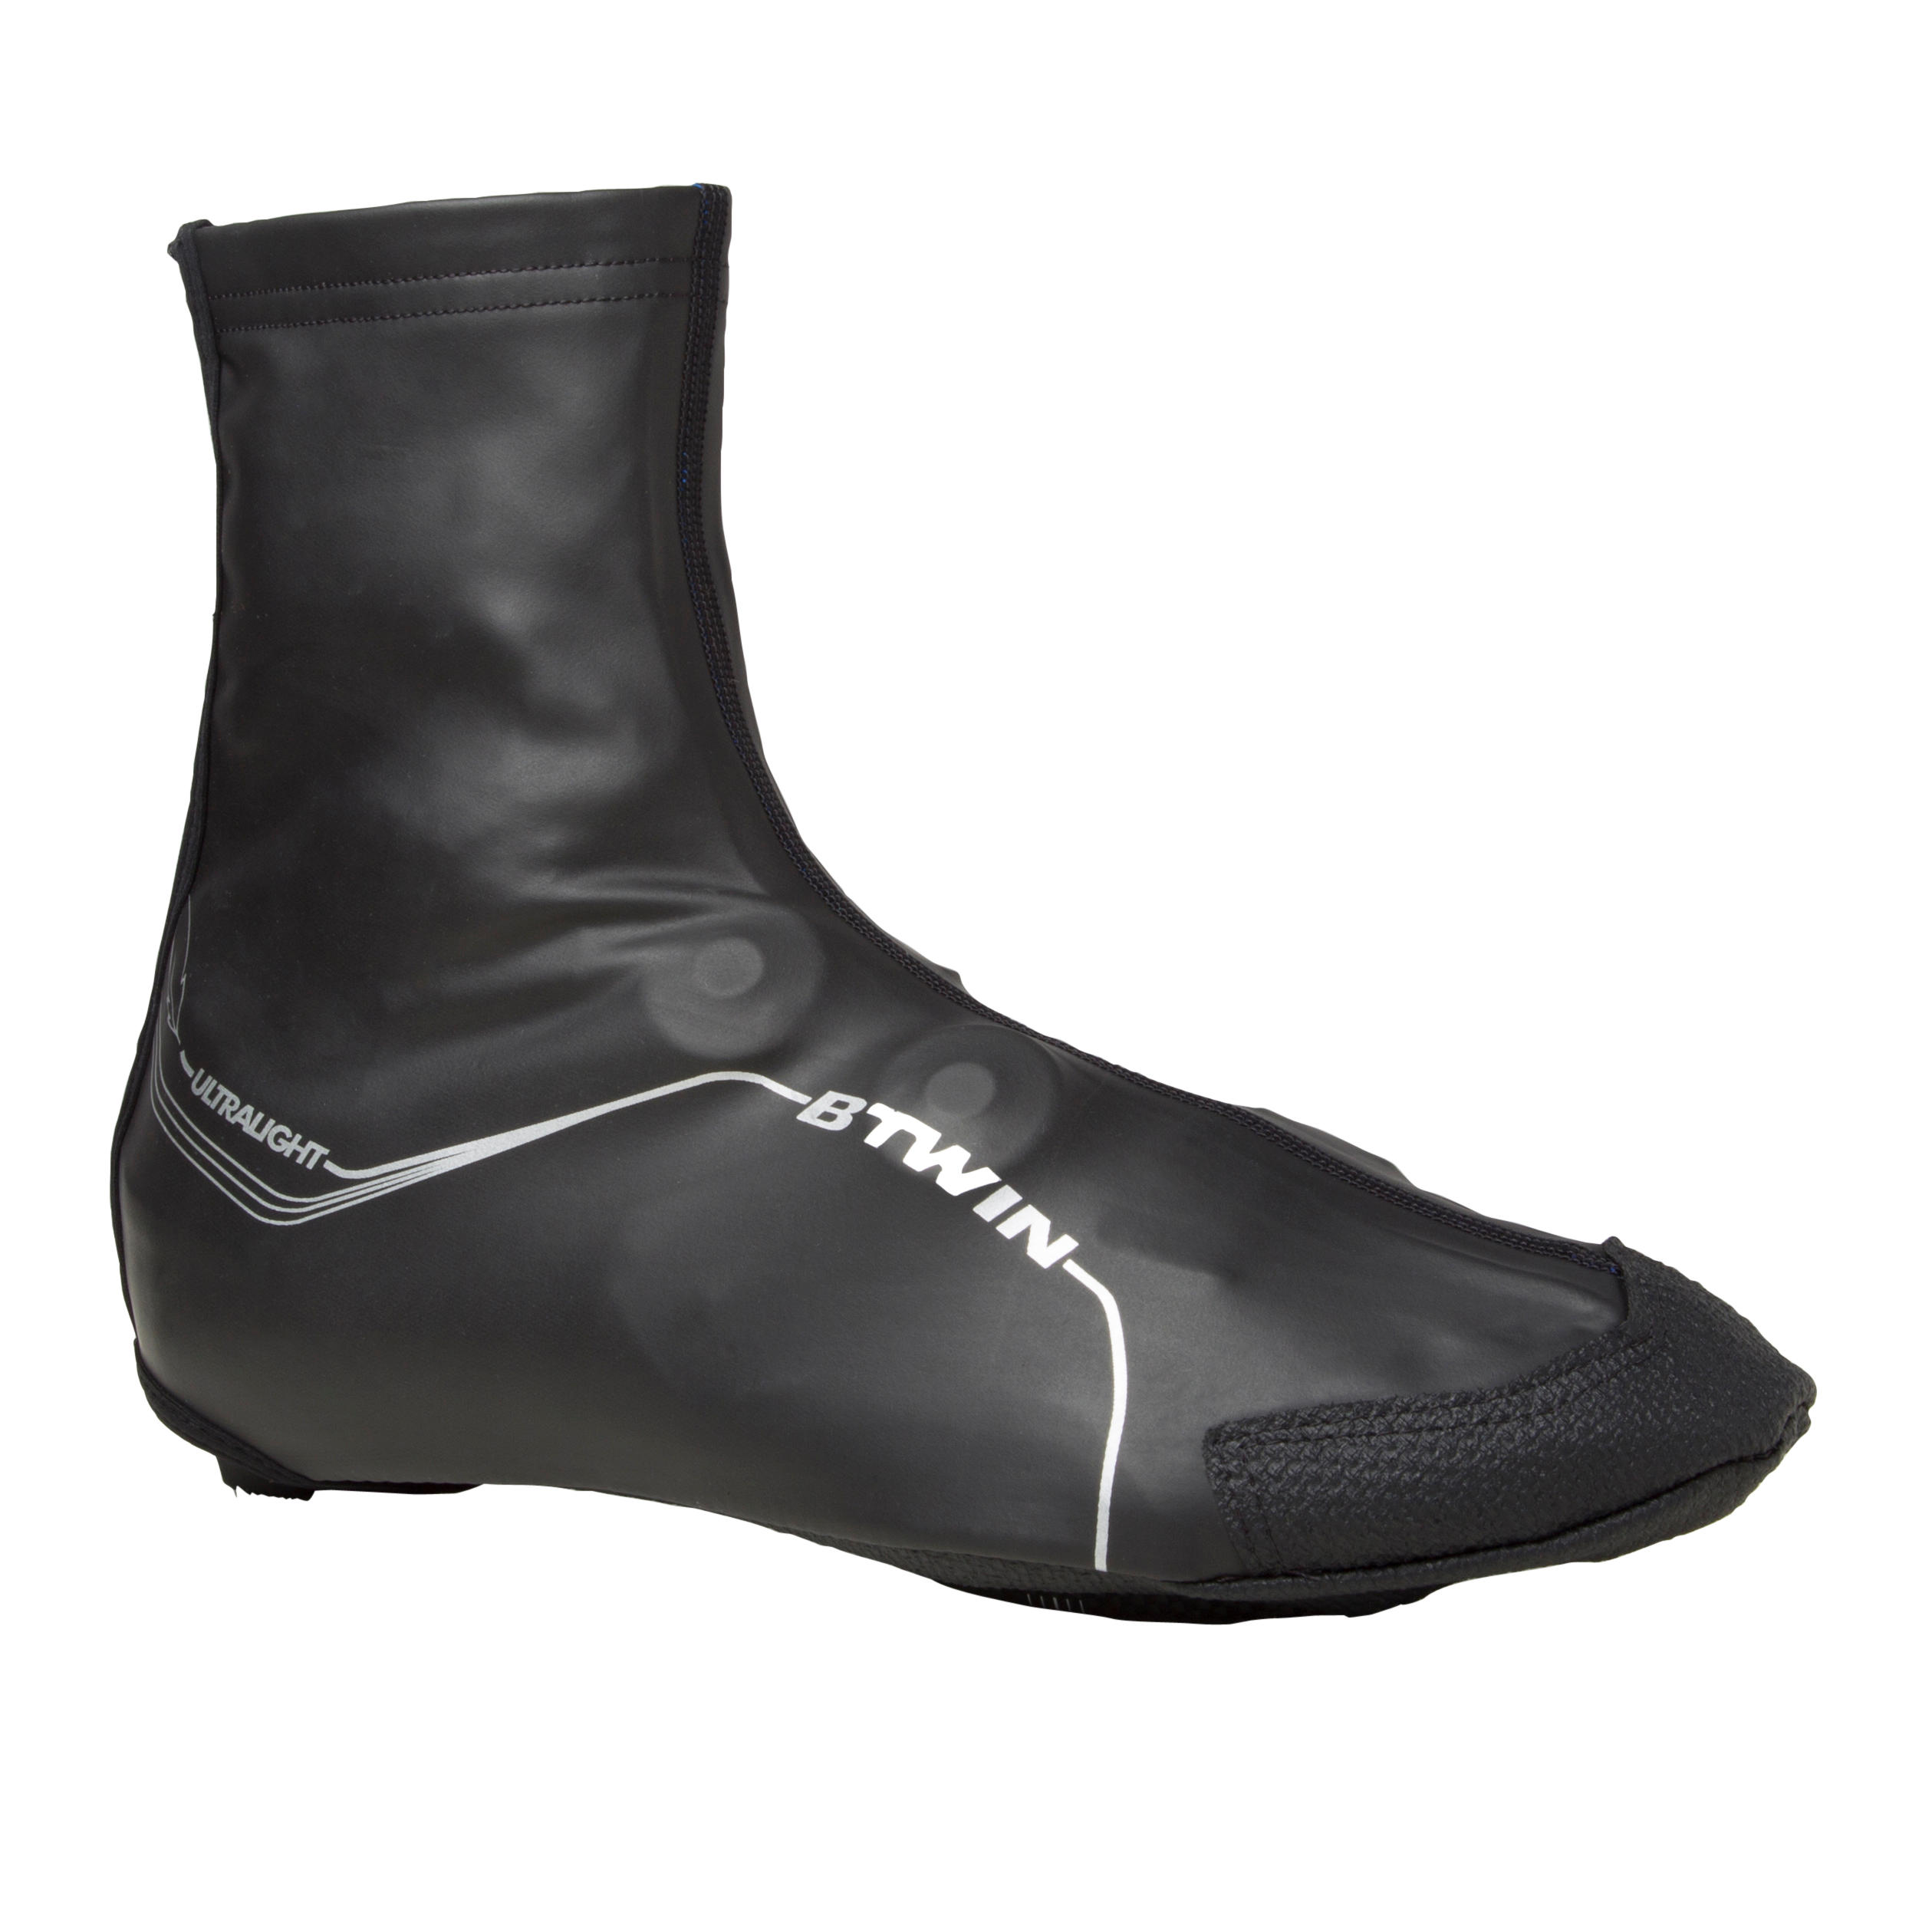 BTWIN Aerofit 700 Cycling Shoe Covers - Black